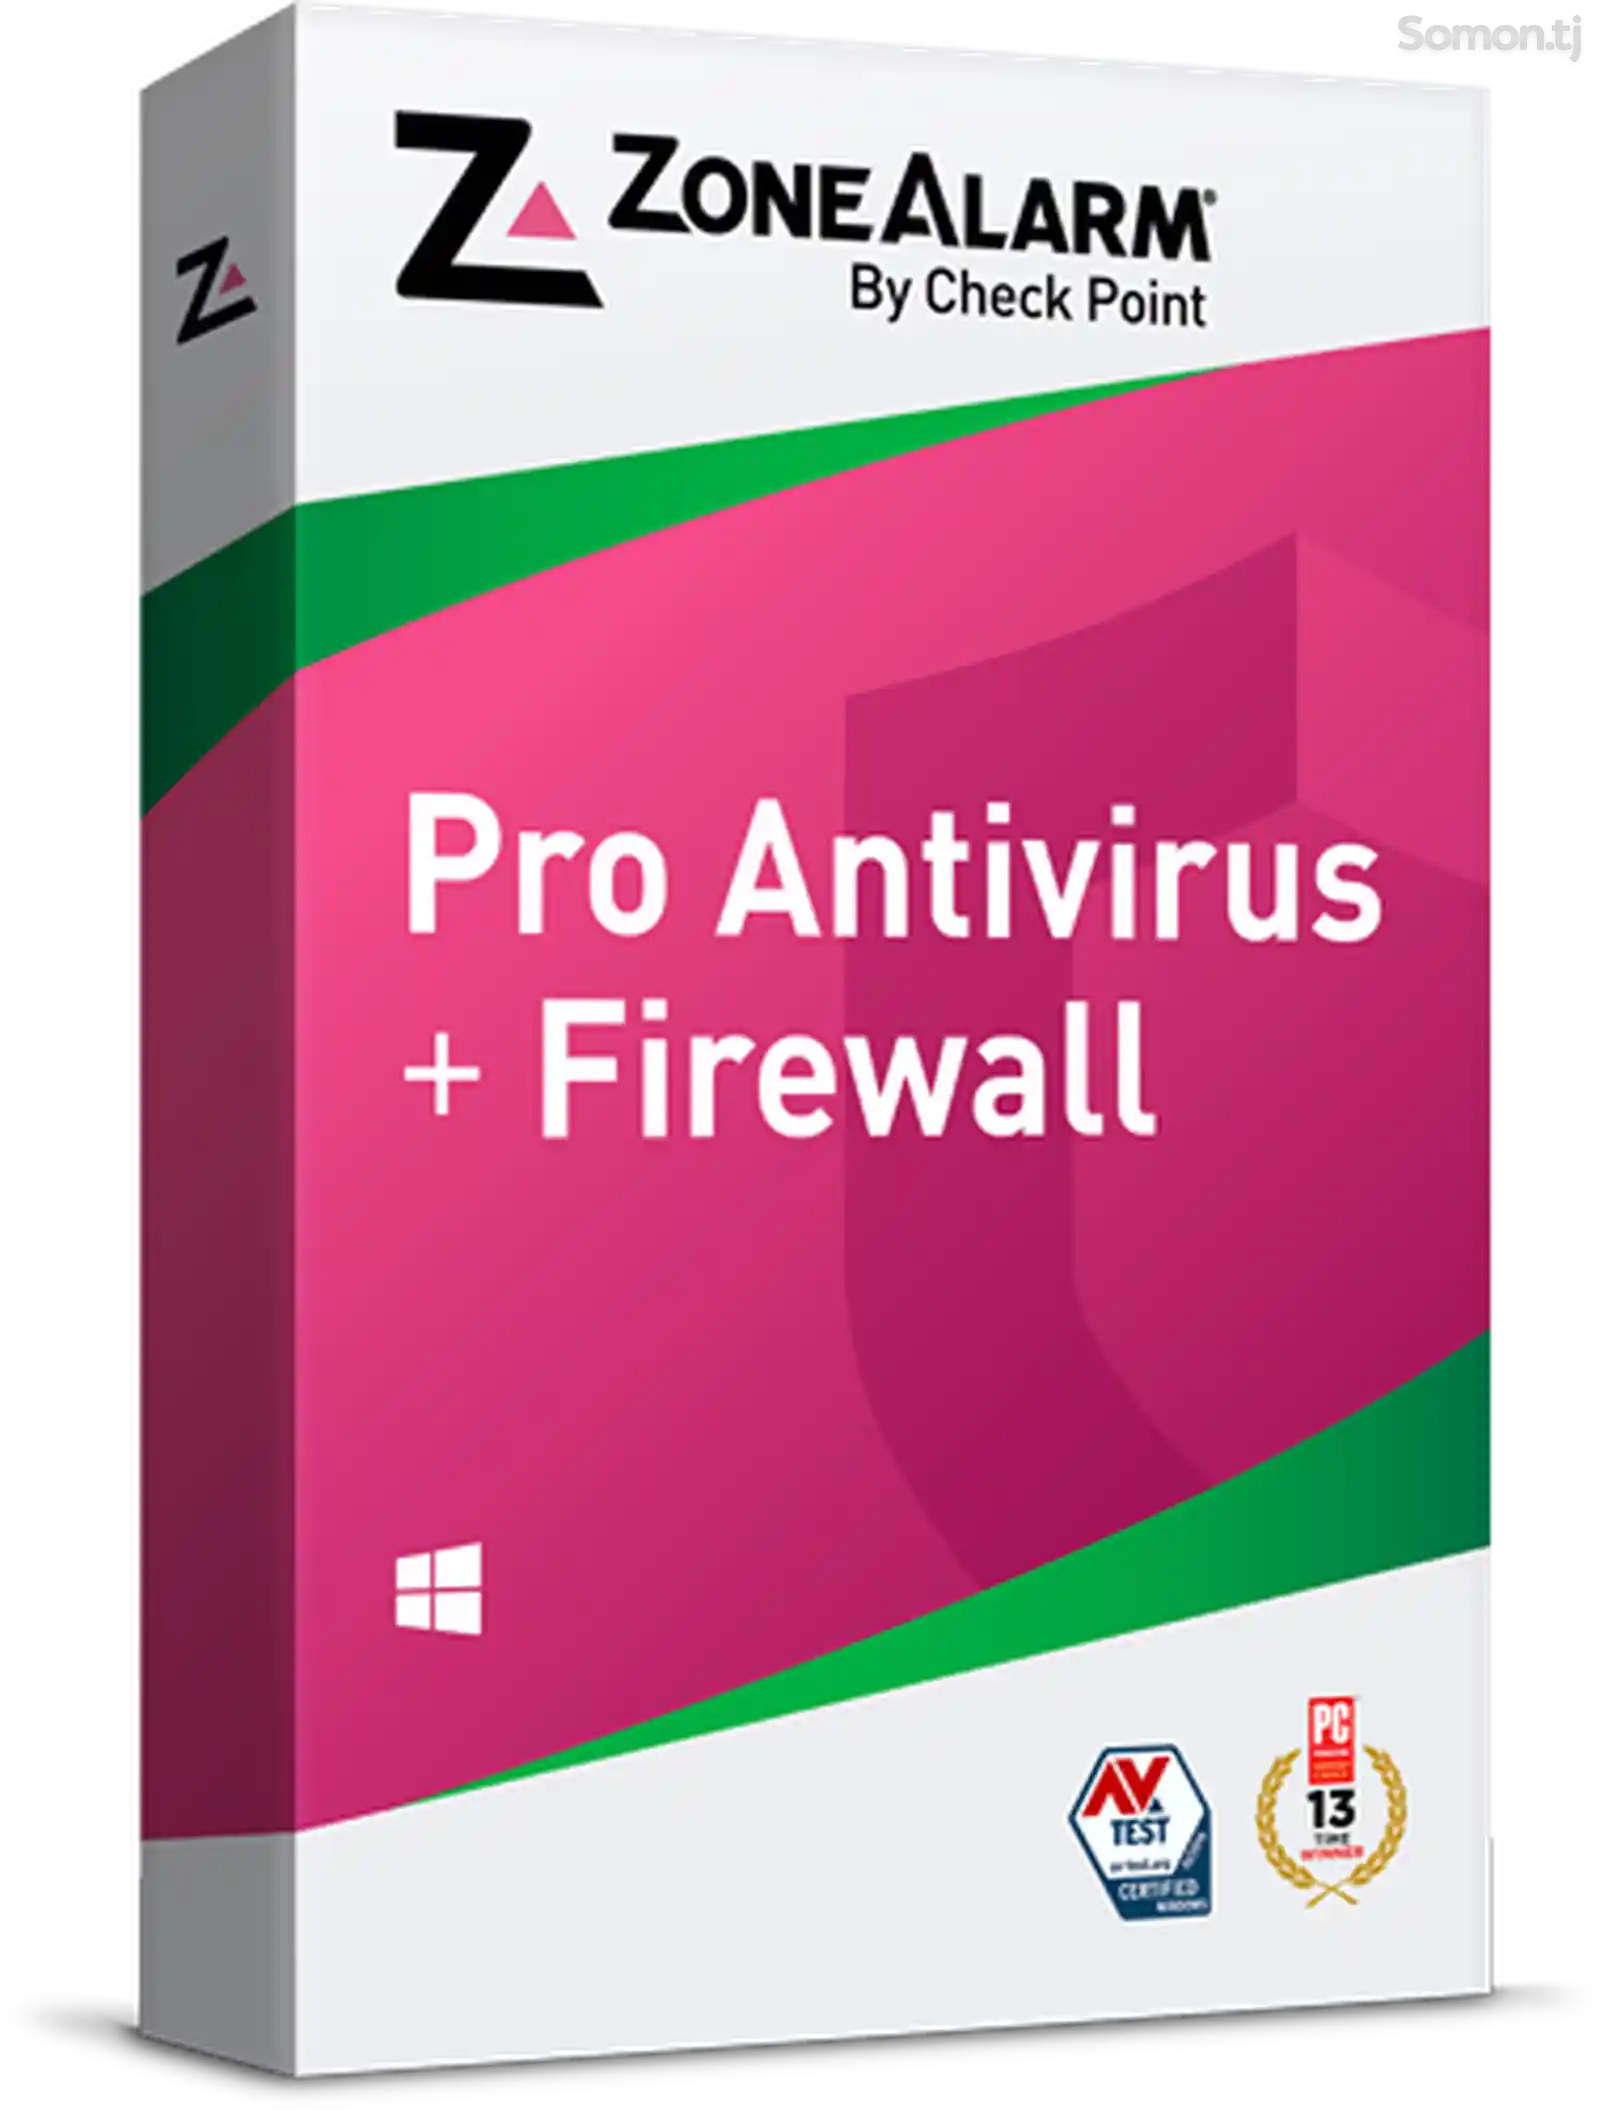 ZoneAlarm Pro Antivirus+Firewall - иҷозатнома 10 роёна, 1 сол